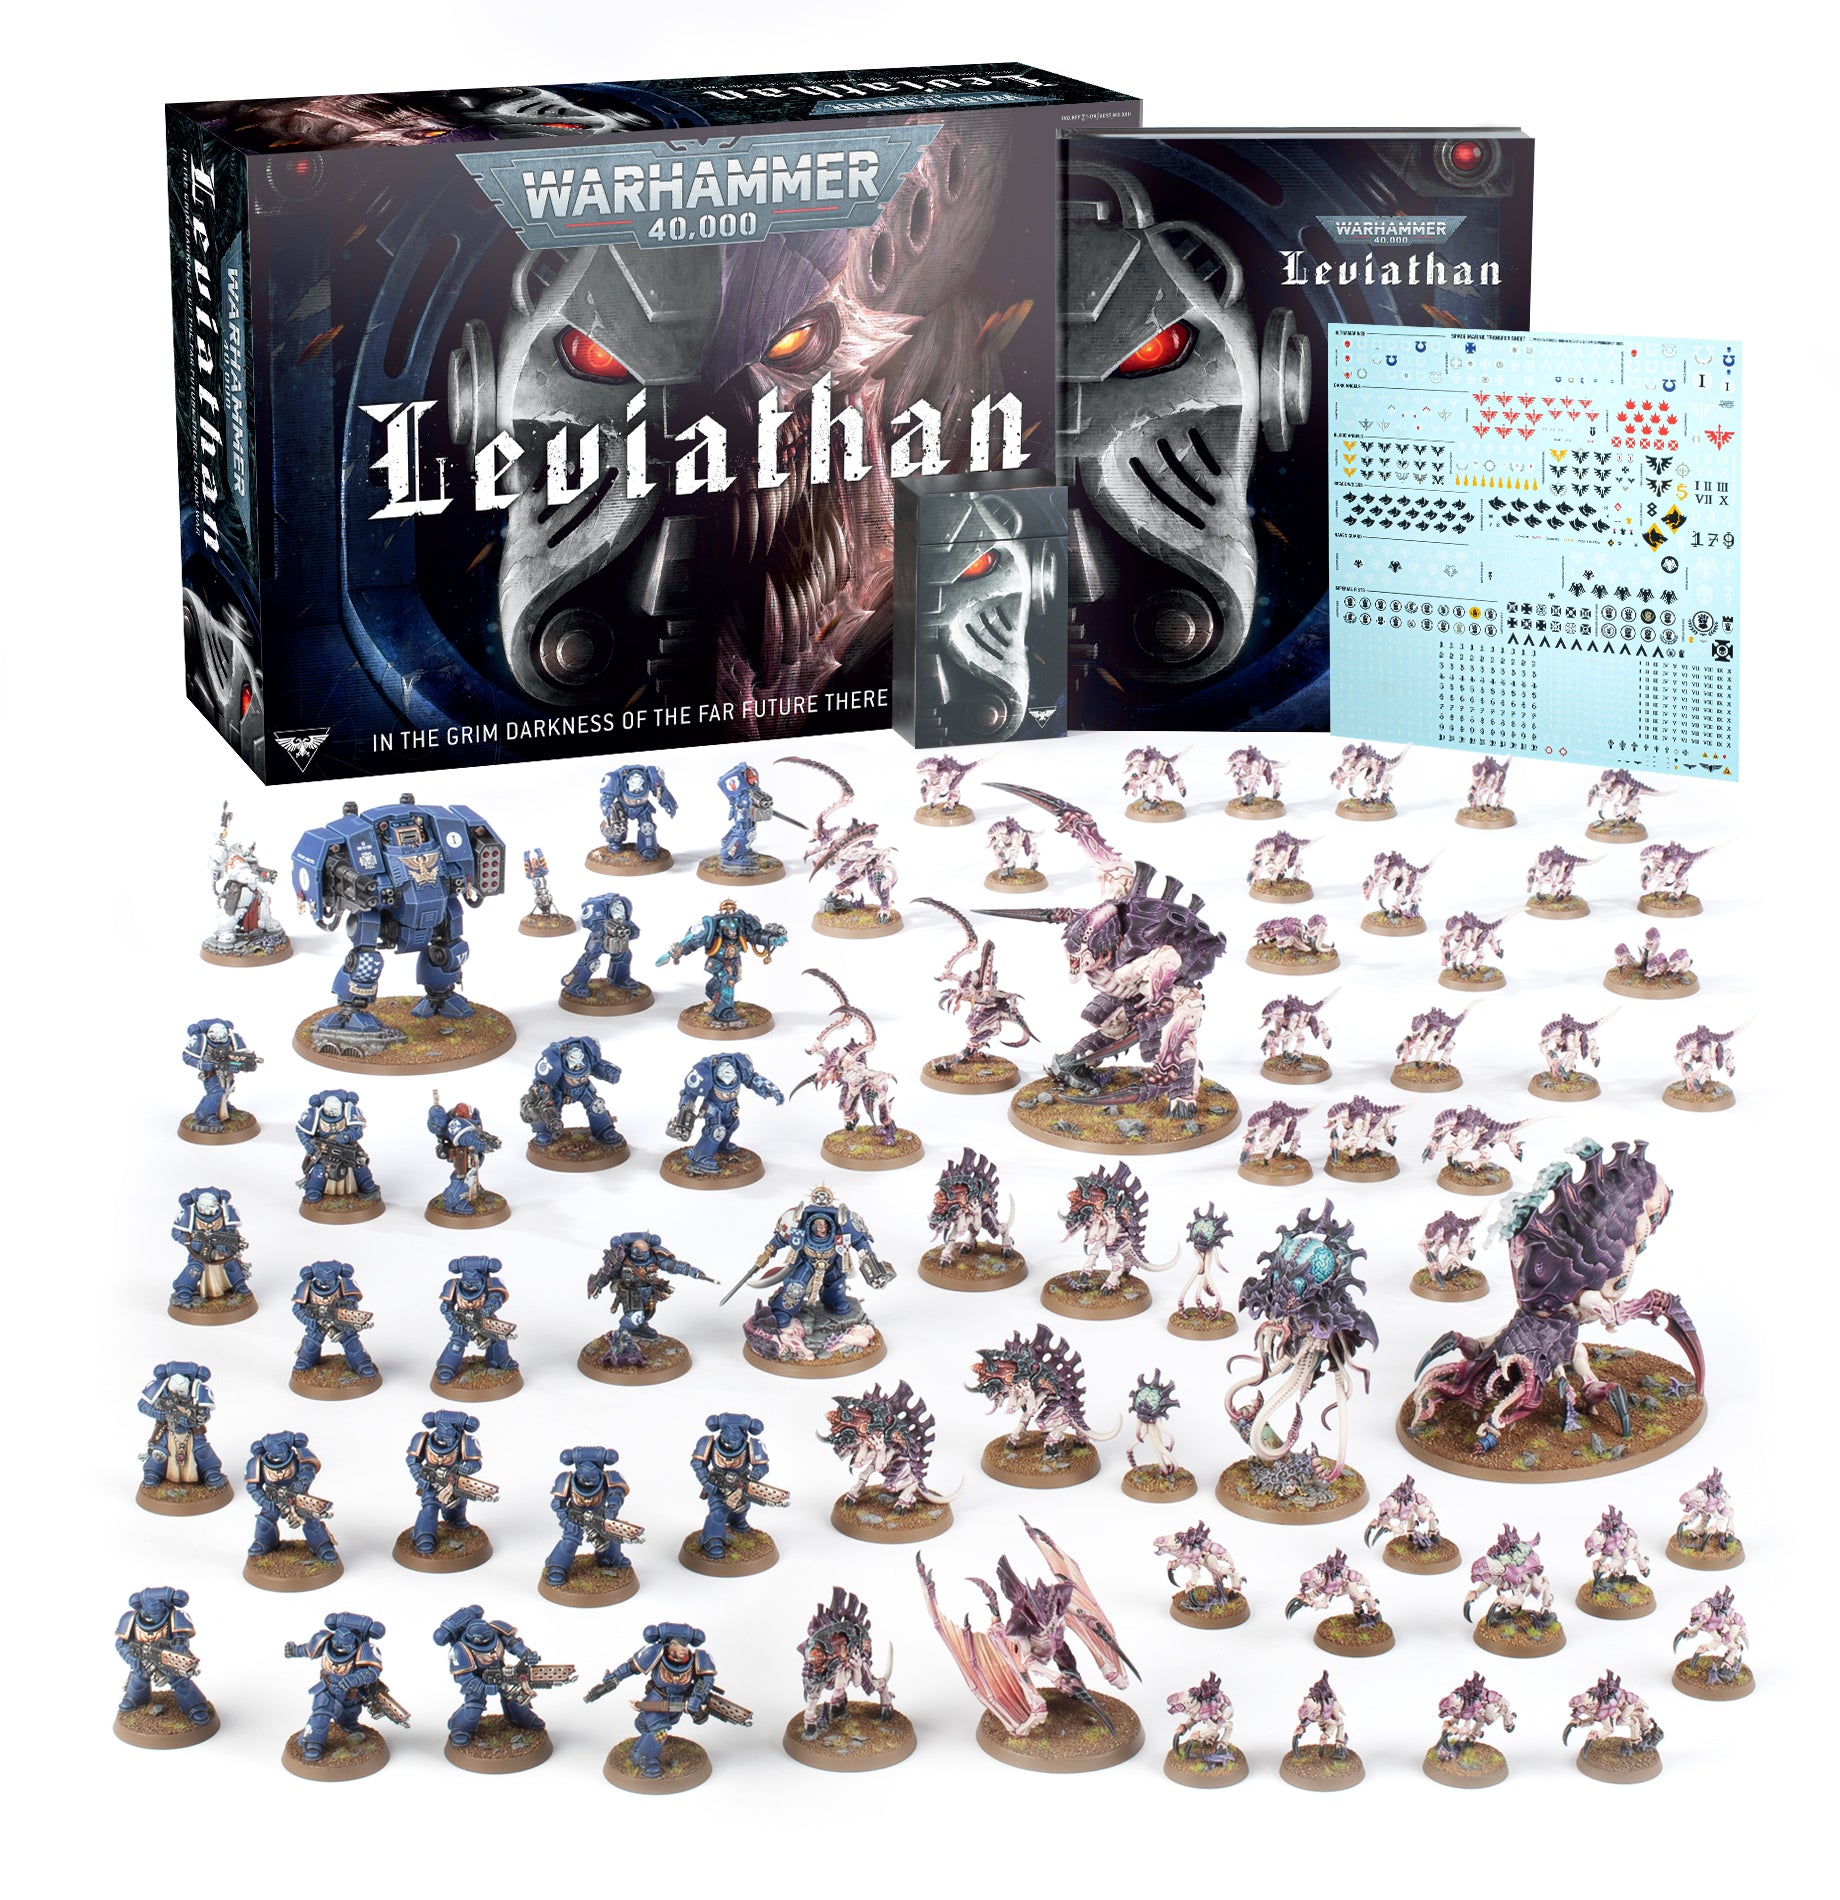 Warhammer 40K 10th Edition and Leviathan box set preview